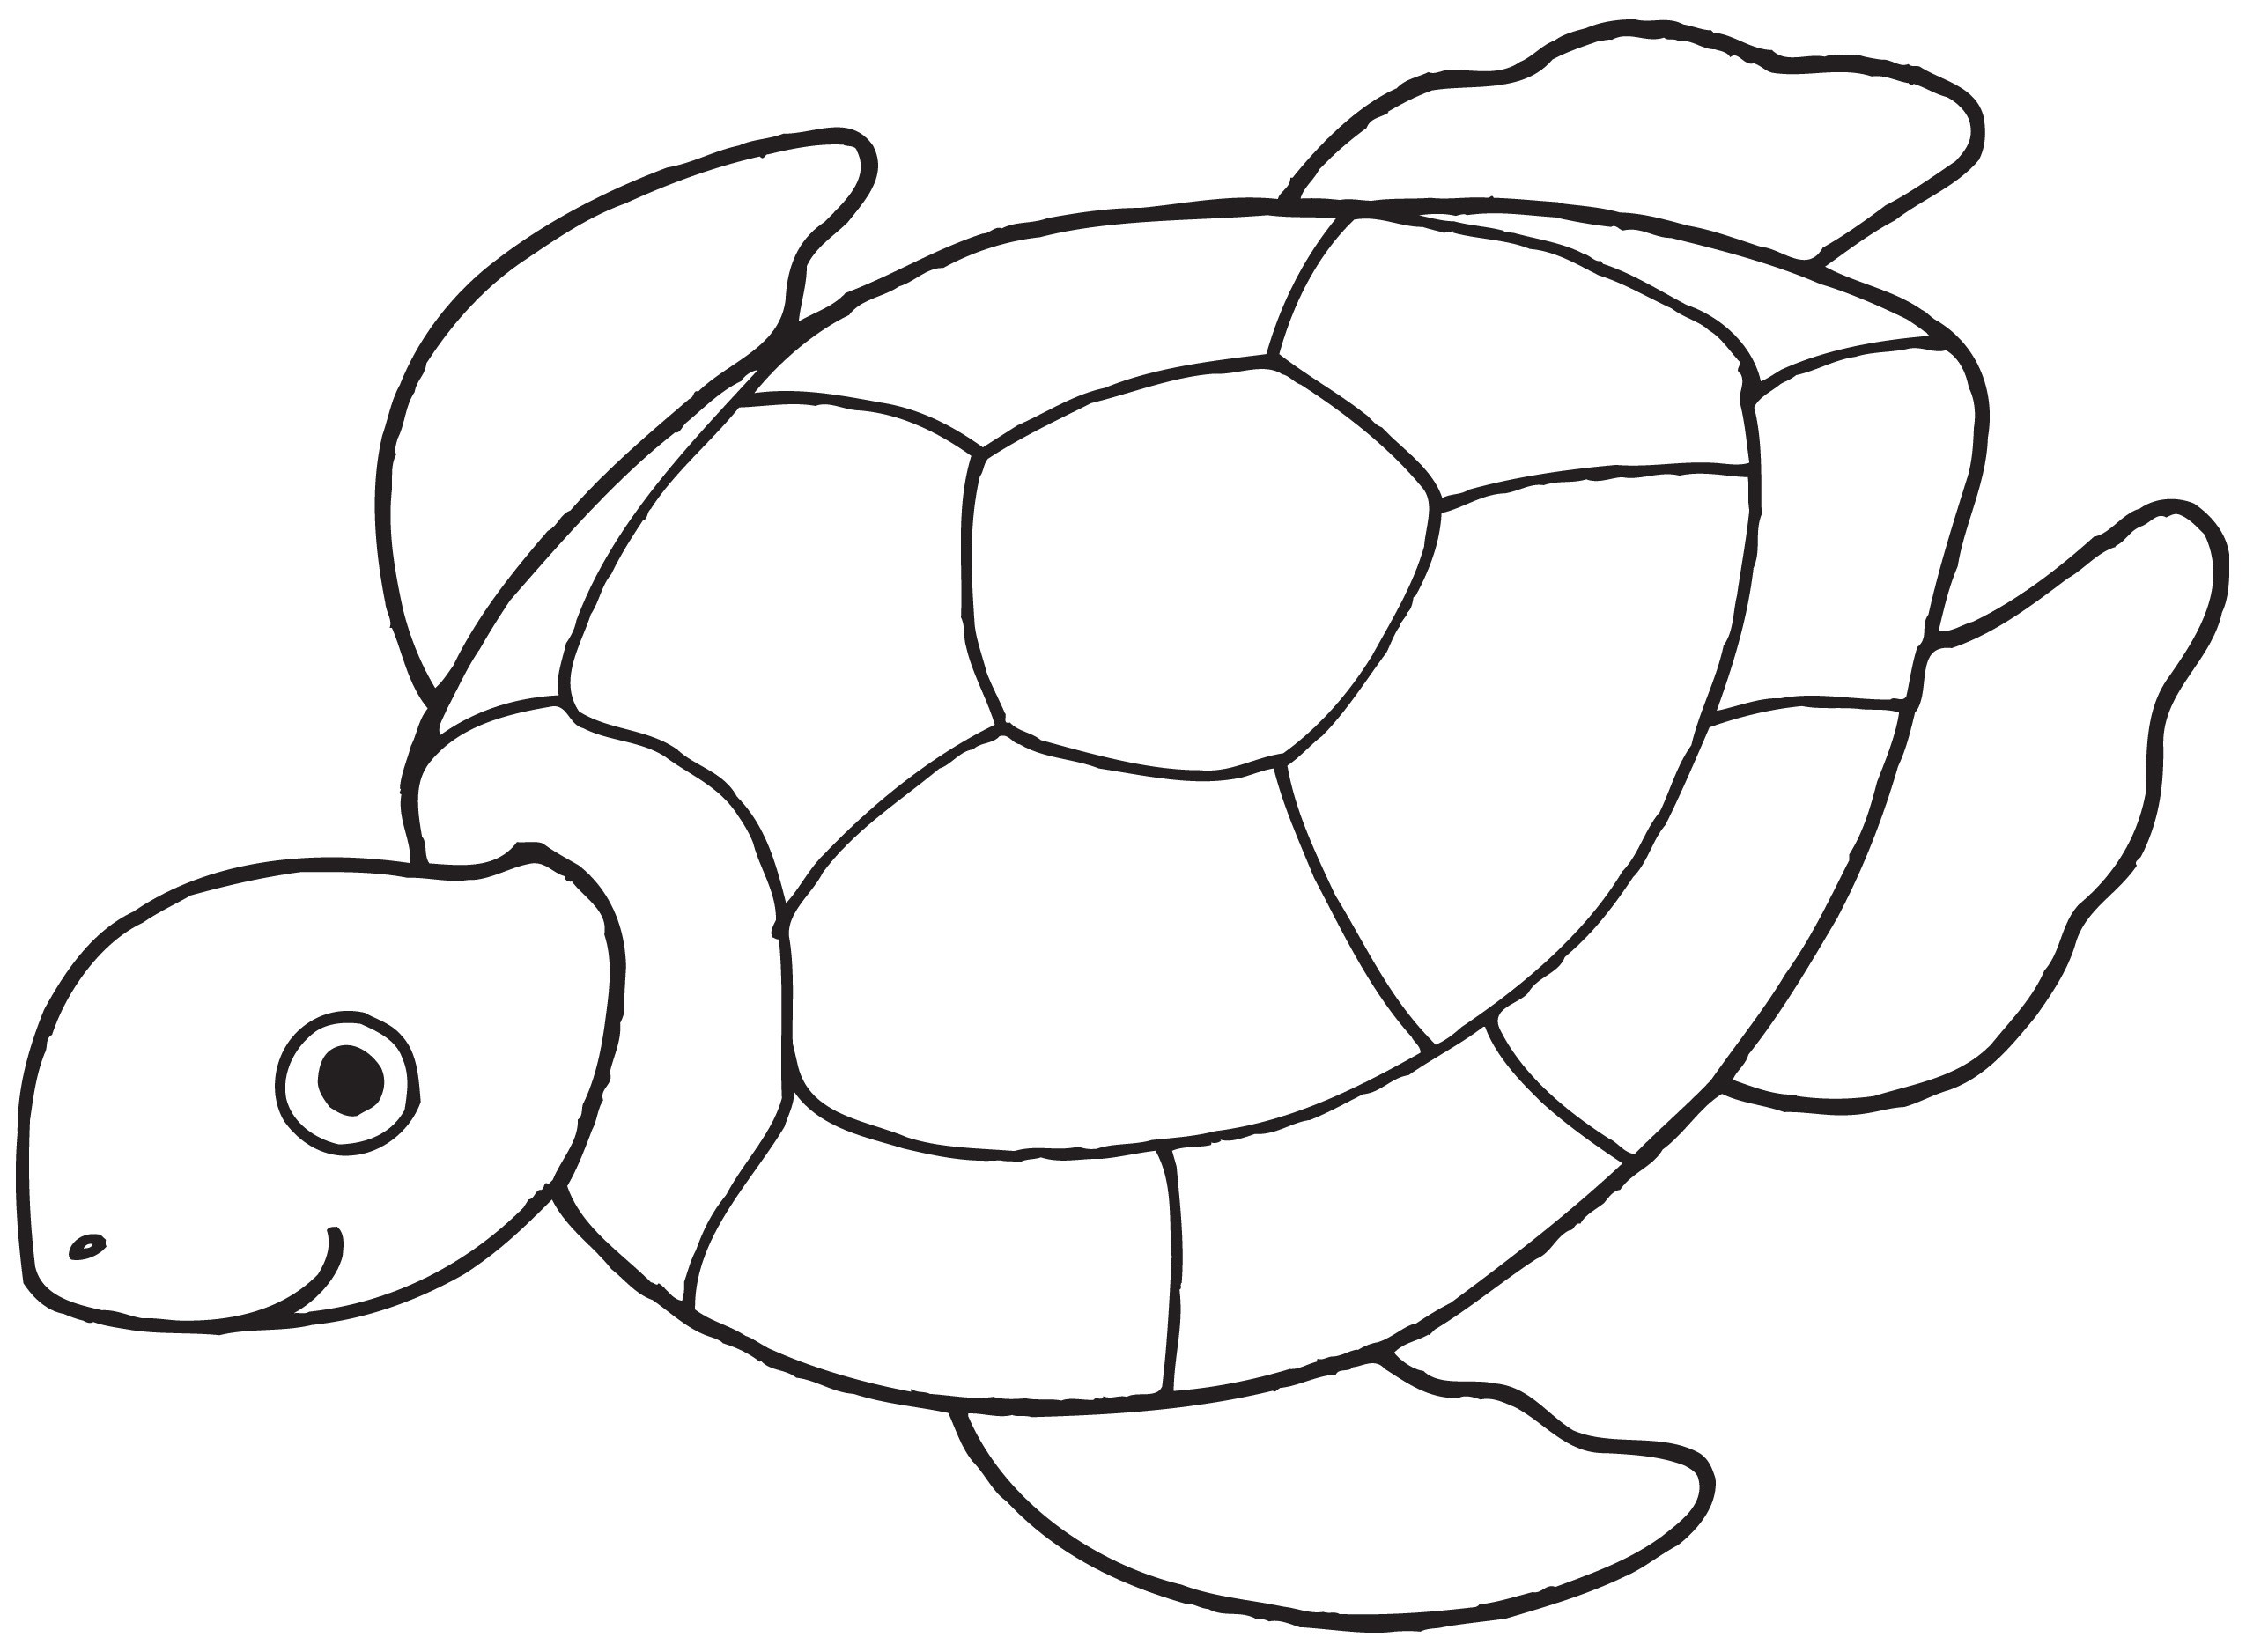 Loggerhead turtle clipart black and white.